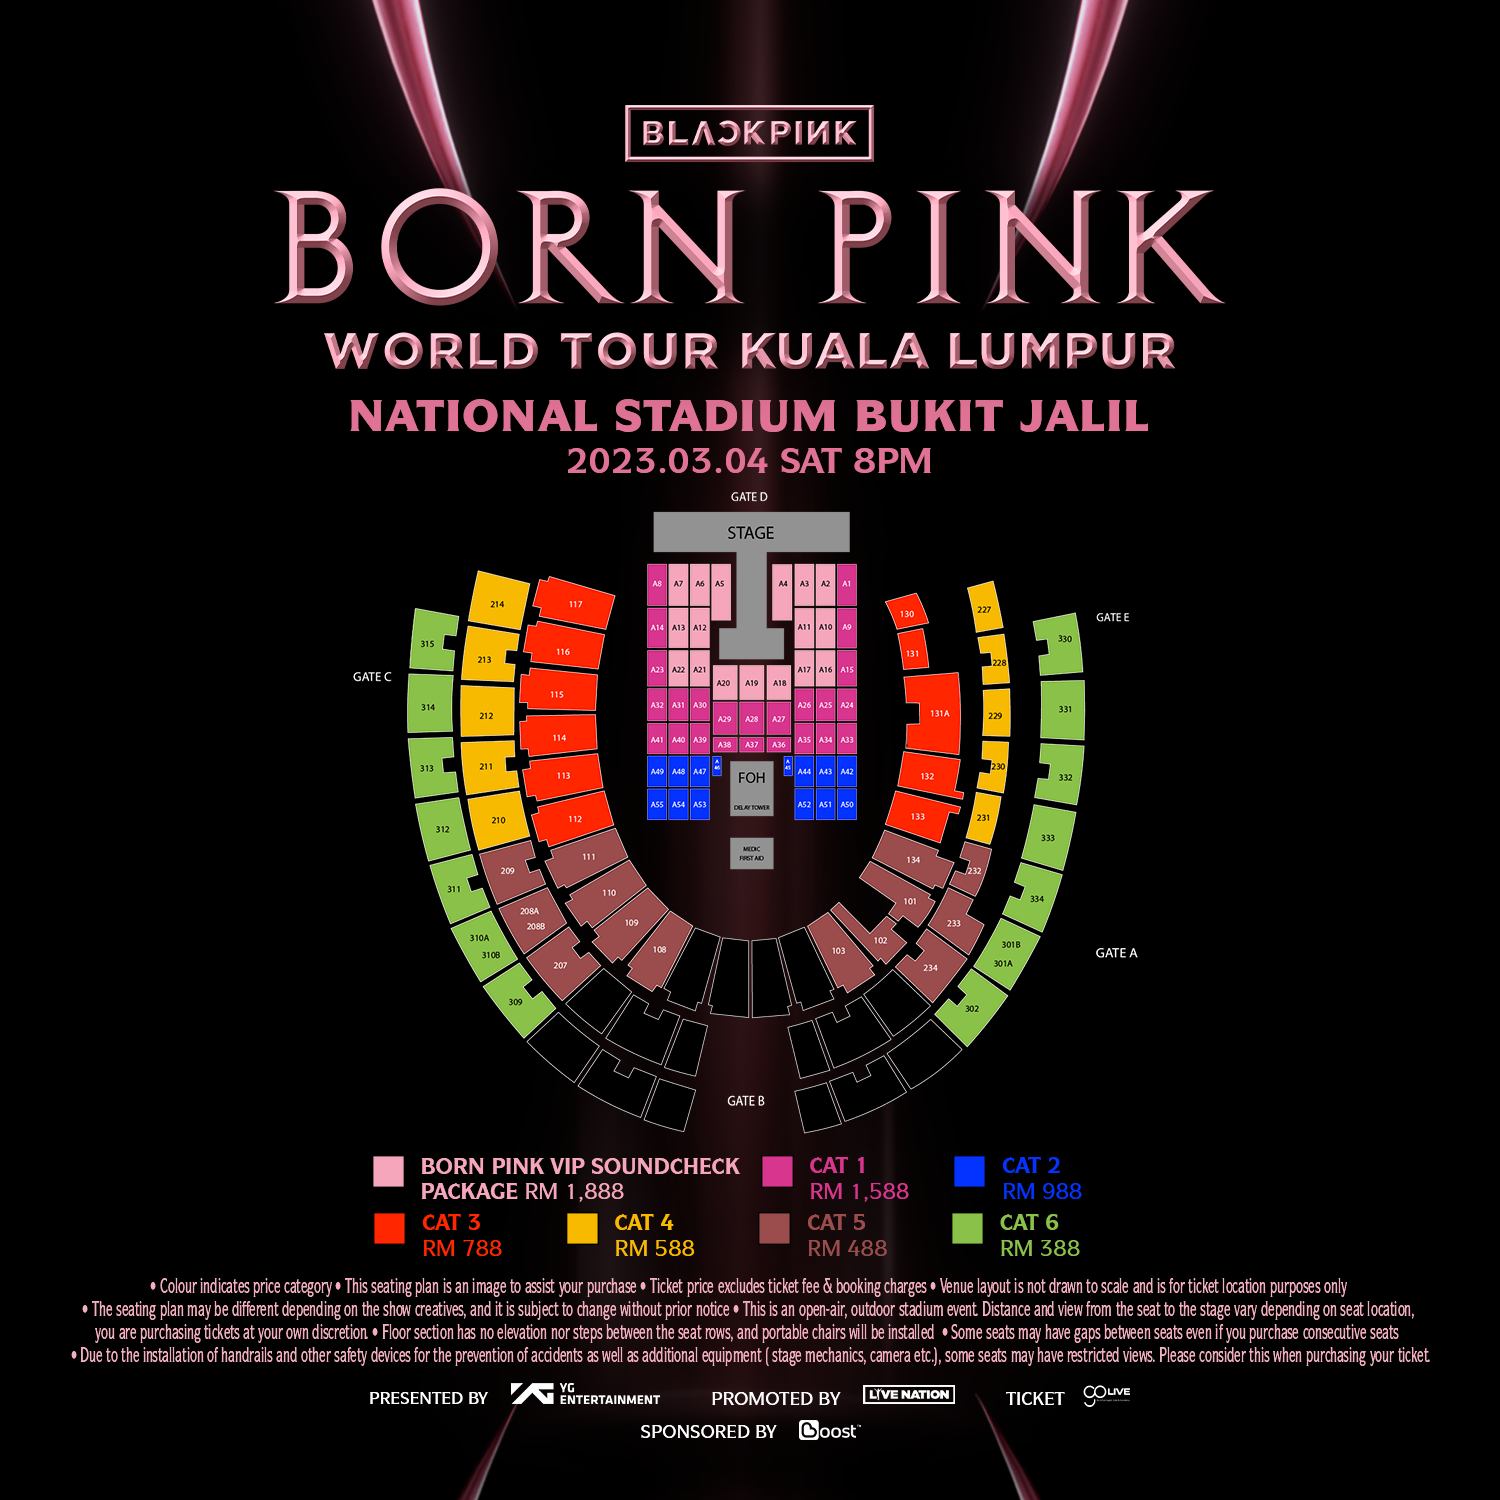 BLACKPINK开唱票价最贵RM1888  粉丝哀嚎“根本抢钱！”